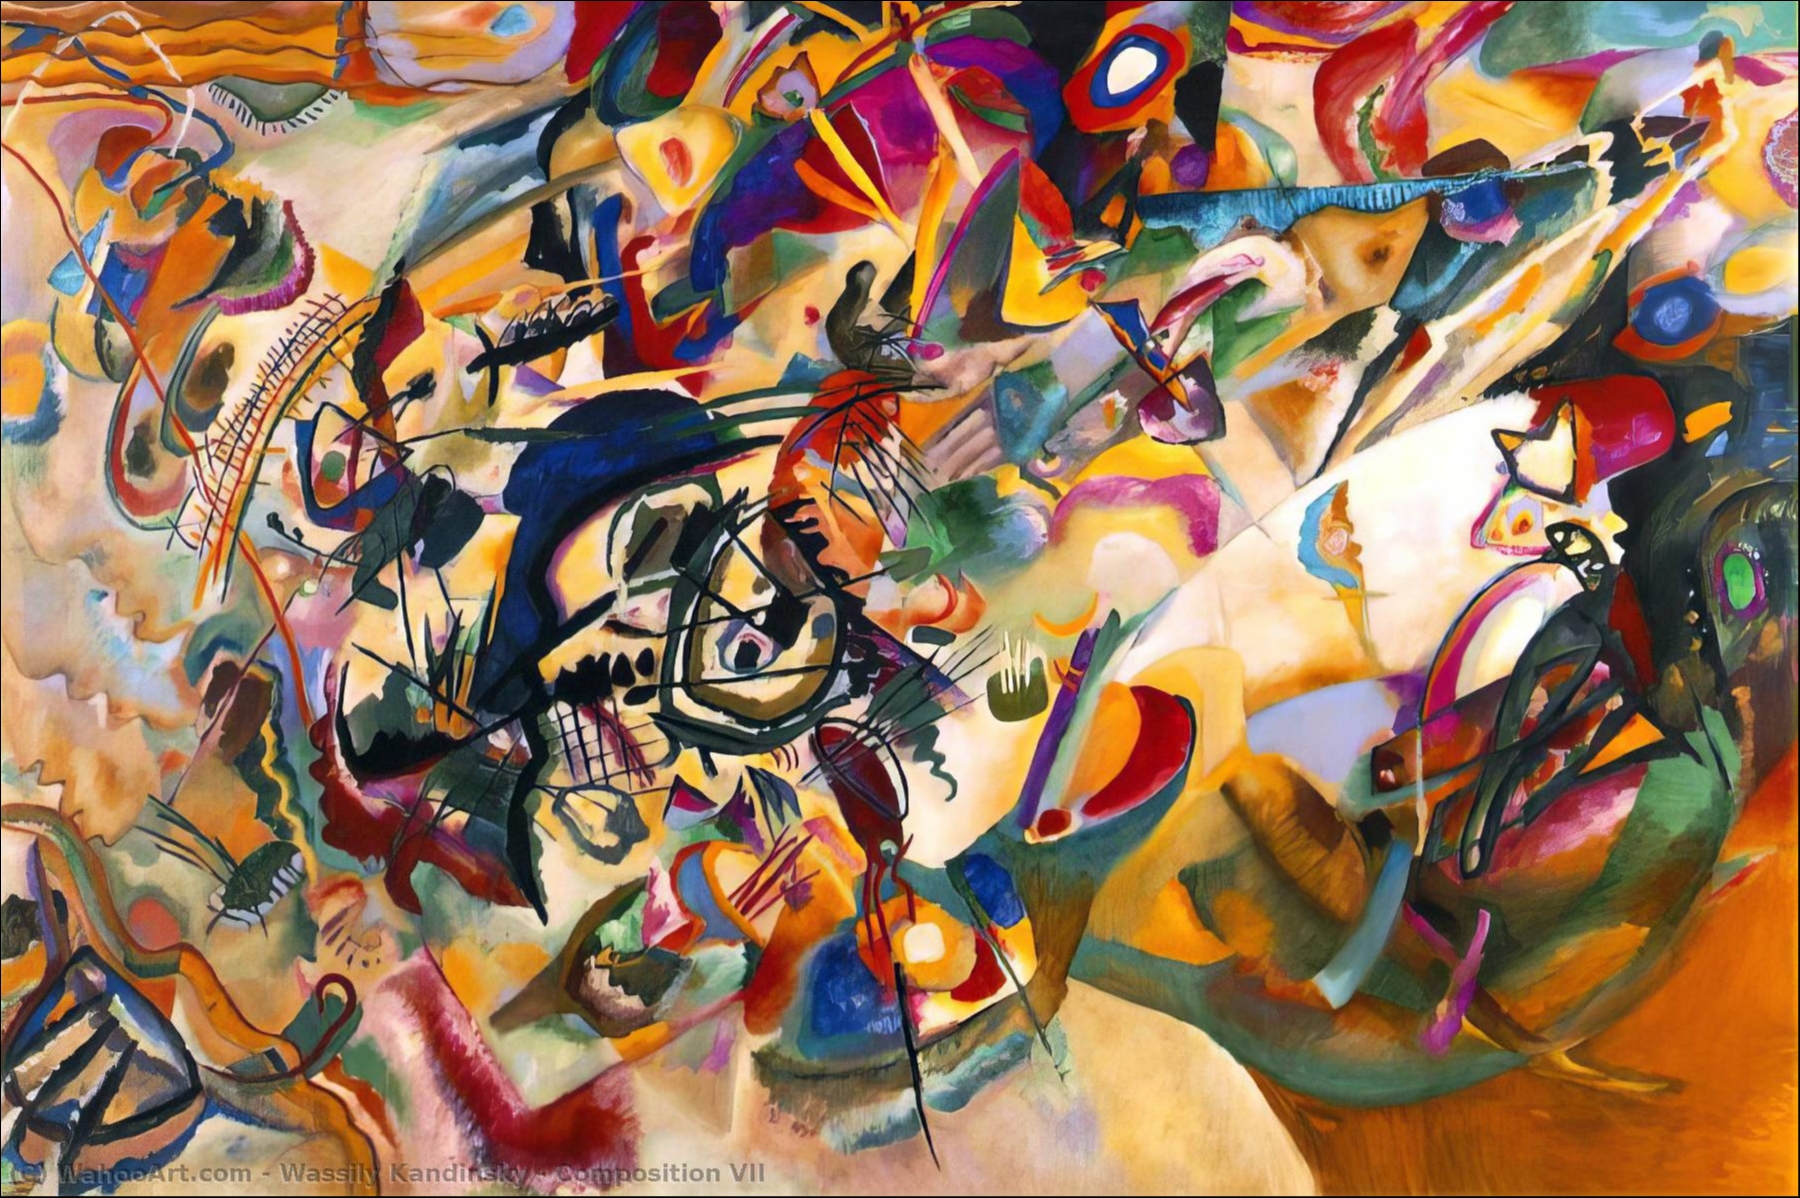 Wassily-Kandinsky-Composition-VII.jpg